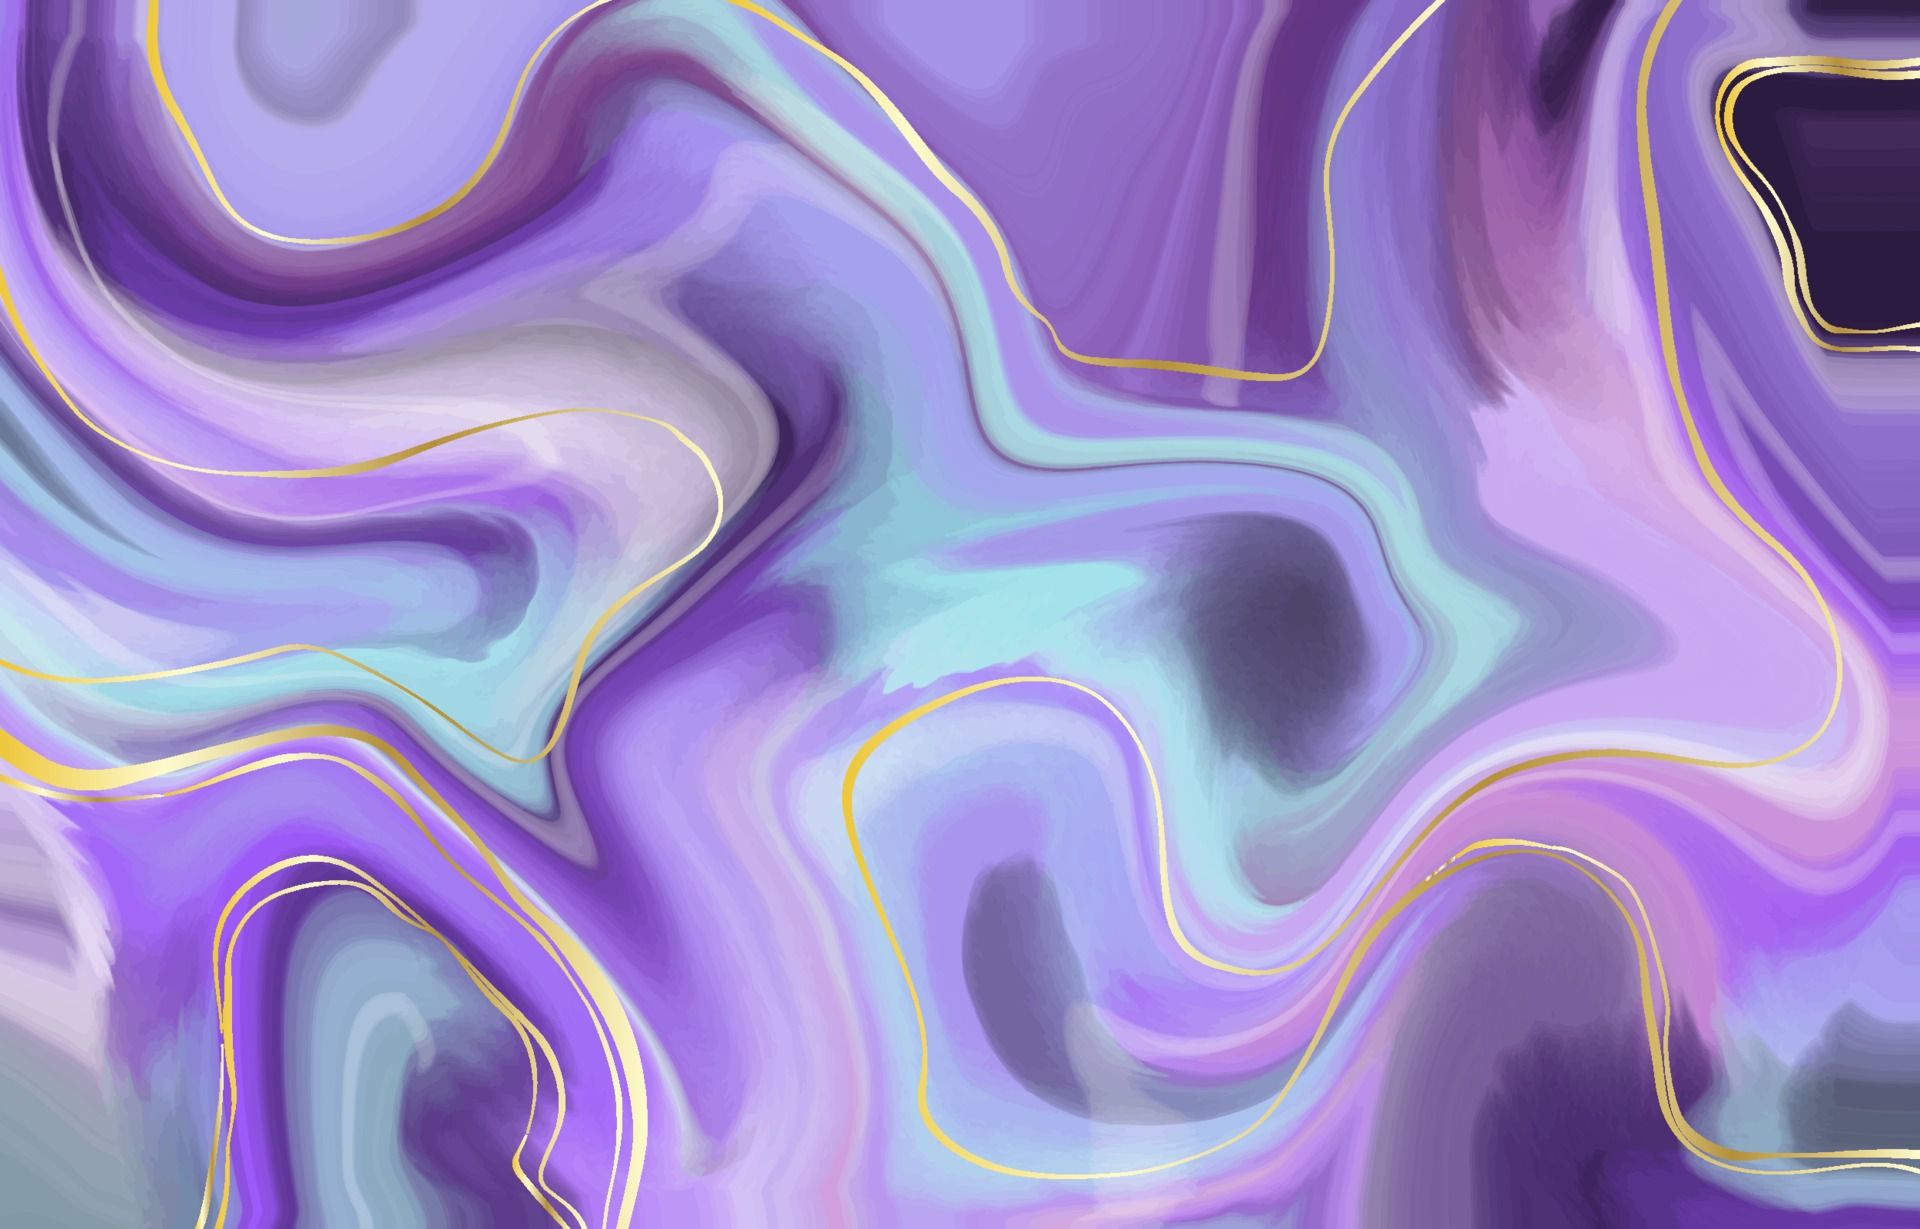  Marmor Hintergrundbild 1920x1229. Aquarell Marmor Hintergrund in lila Farbe 2173379 Vektor Kunst bei Vecteezy